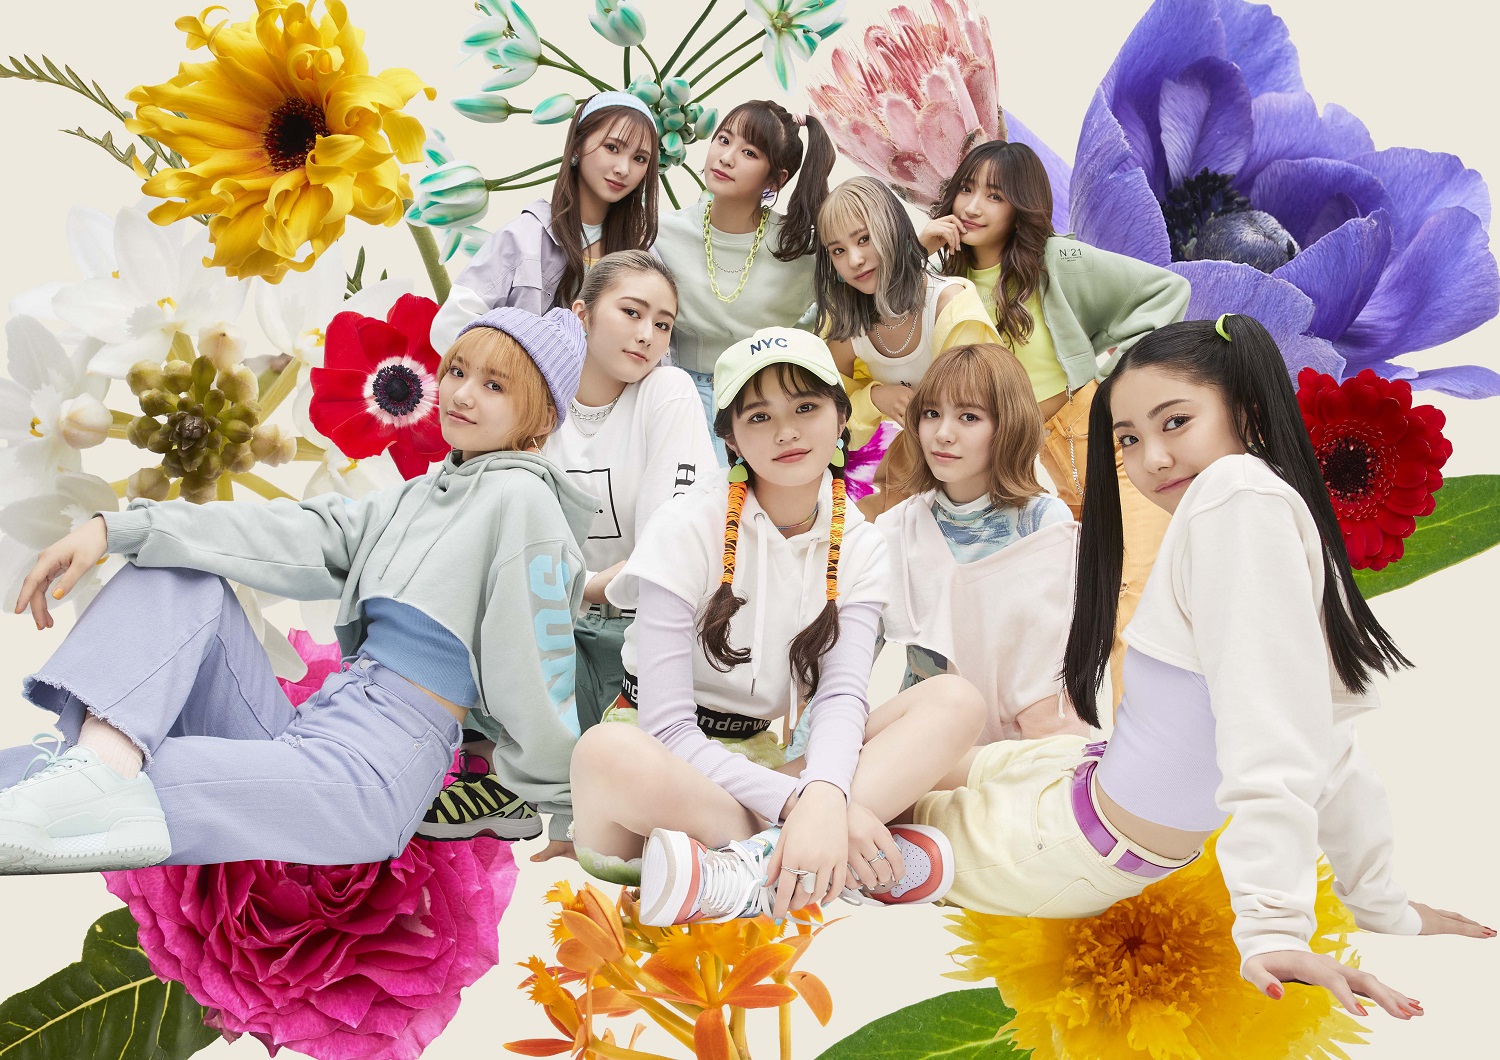 Girls²×FILA×ABC-MART 初のコラボレーション - ニュース | アイドル 